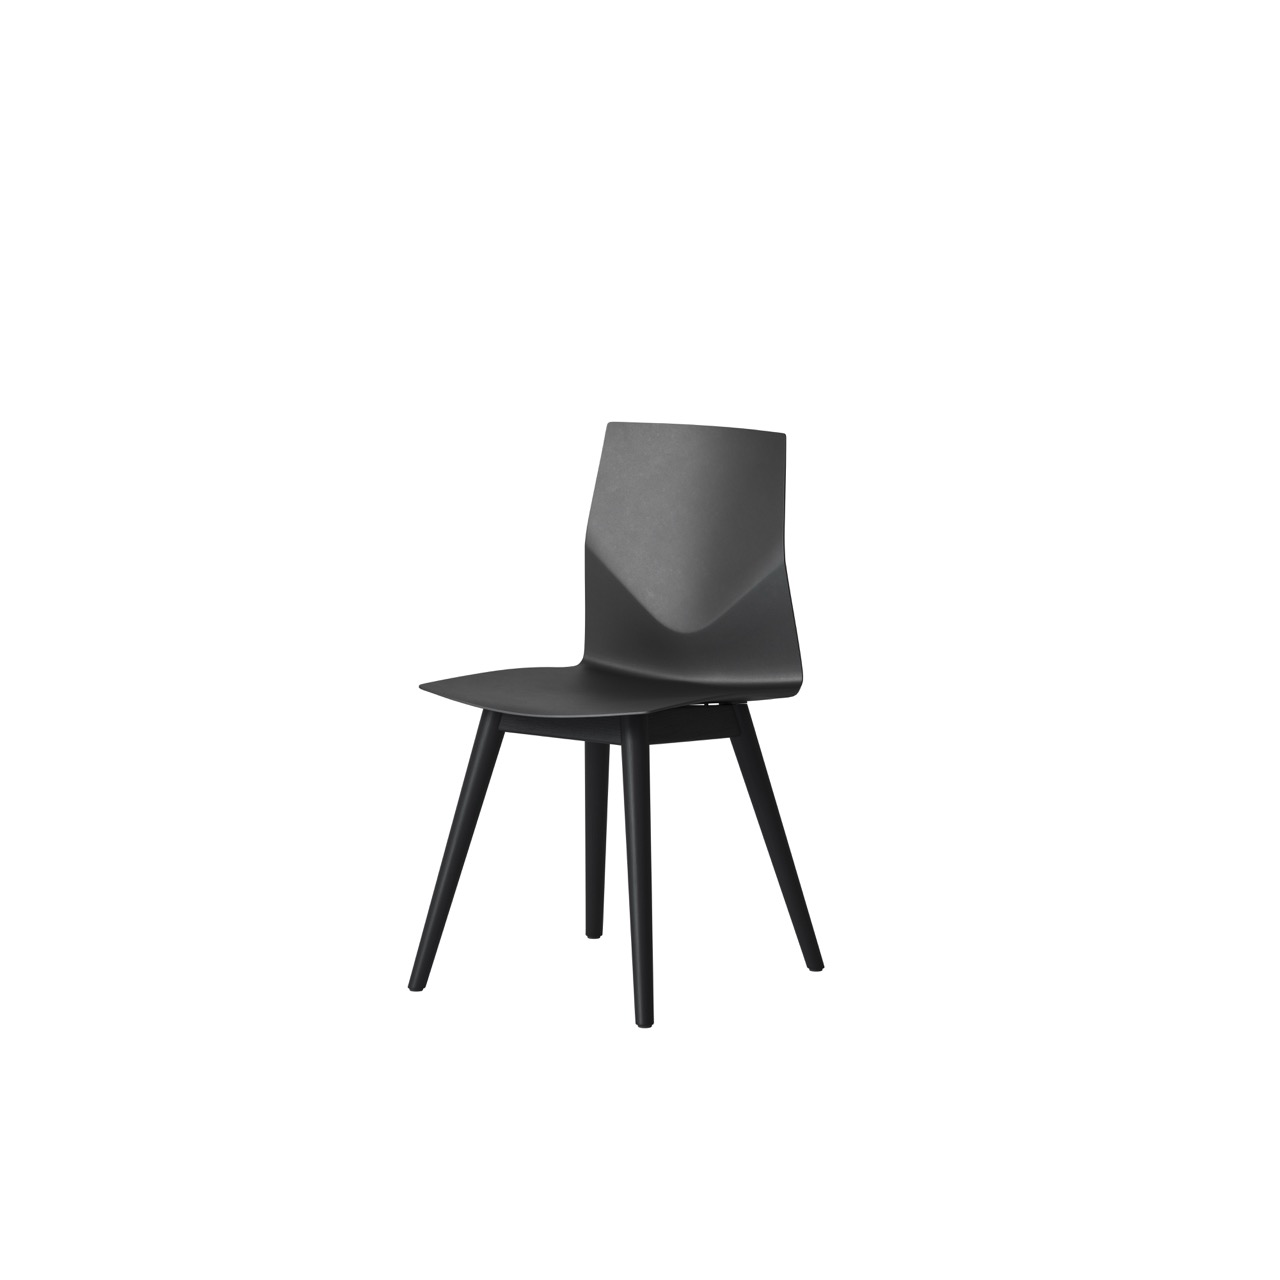 OCEE&FOUR – Chairs – FourCast 2 Four – Plastic shell - Black oak frame - Packshot Image 2 Large